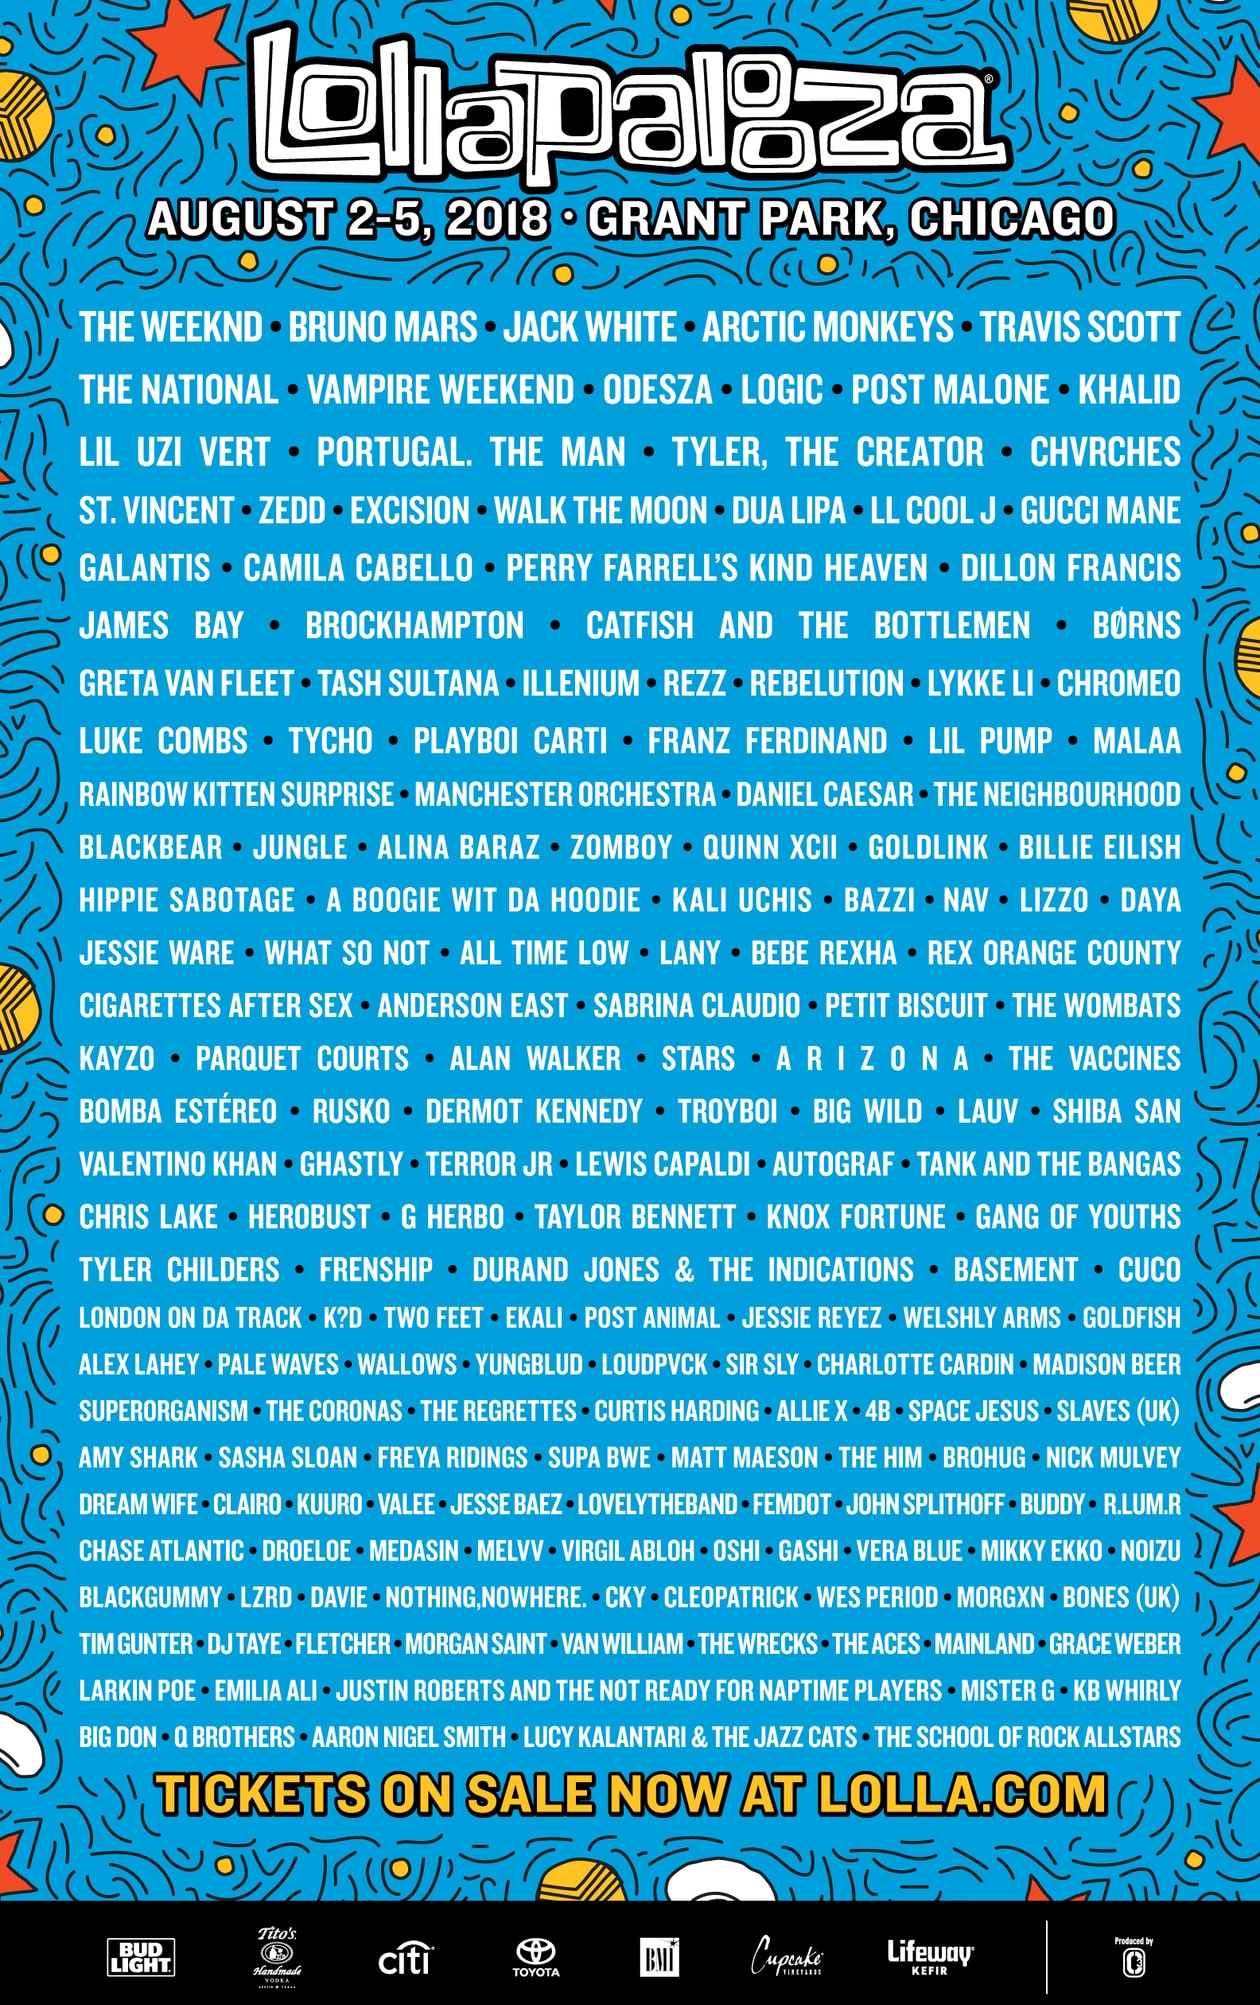 Lollapalooza 2018 Lineup The Weeknd Bruno Mars Travis Scott Jack White Arctic Monkeys grant park chicago august 2 5 2018